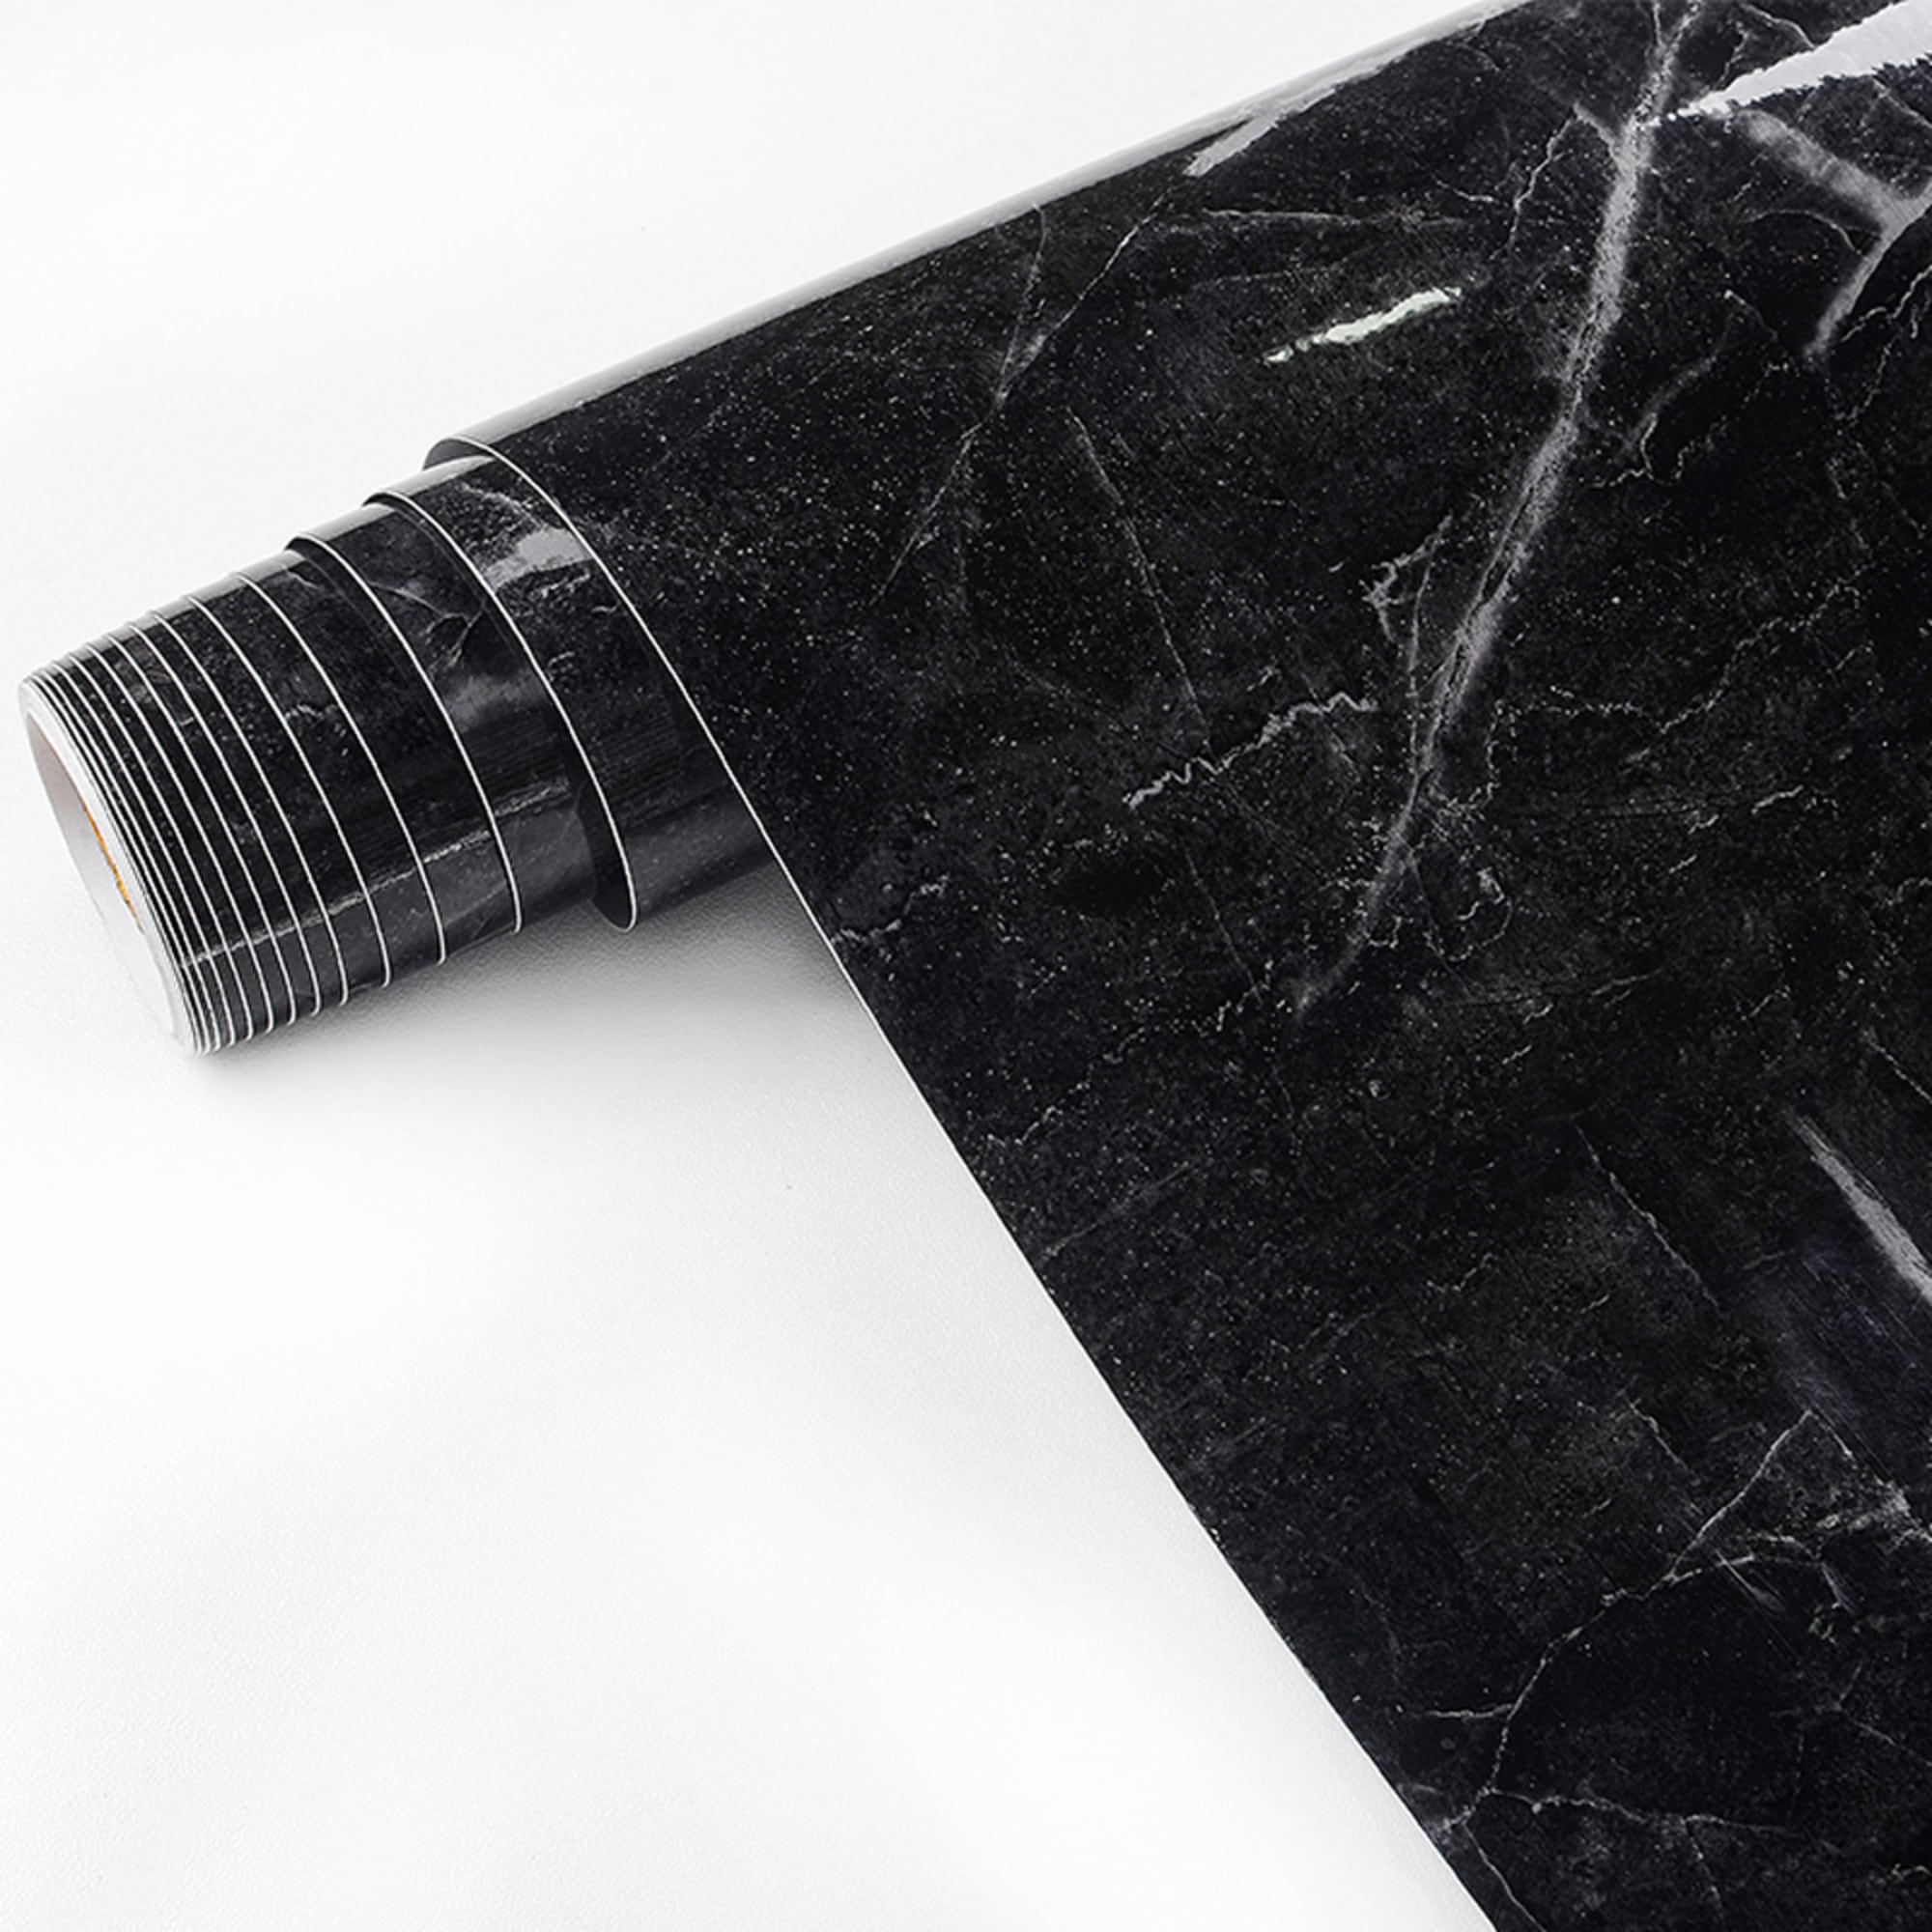 Marble Contact Paper Self Adhesive Peel & Stick Wallpaper PVC Kitchen  Countertop